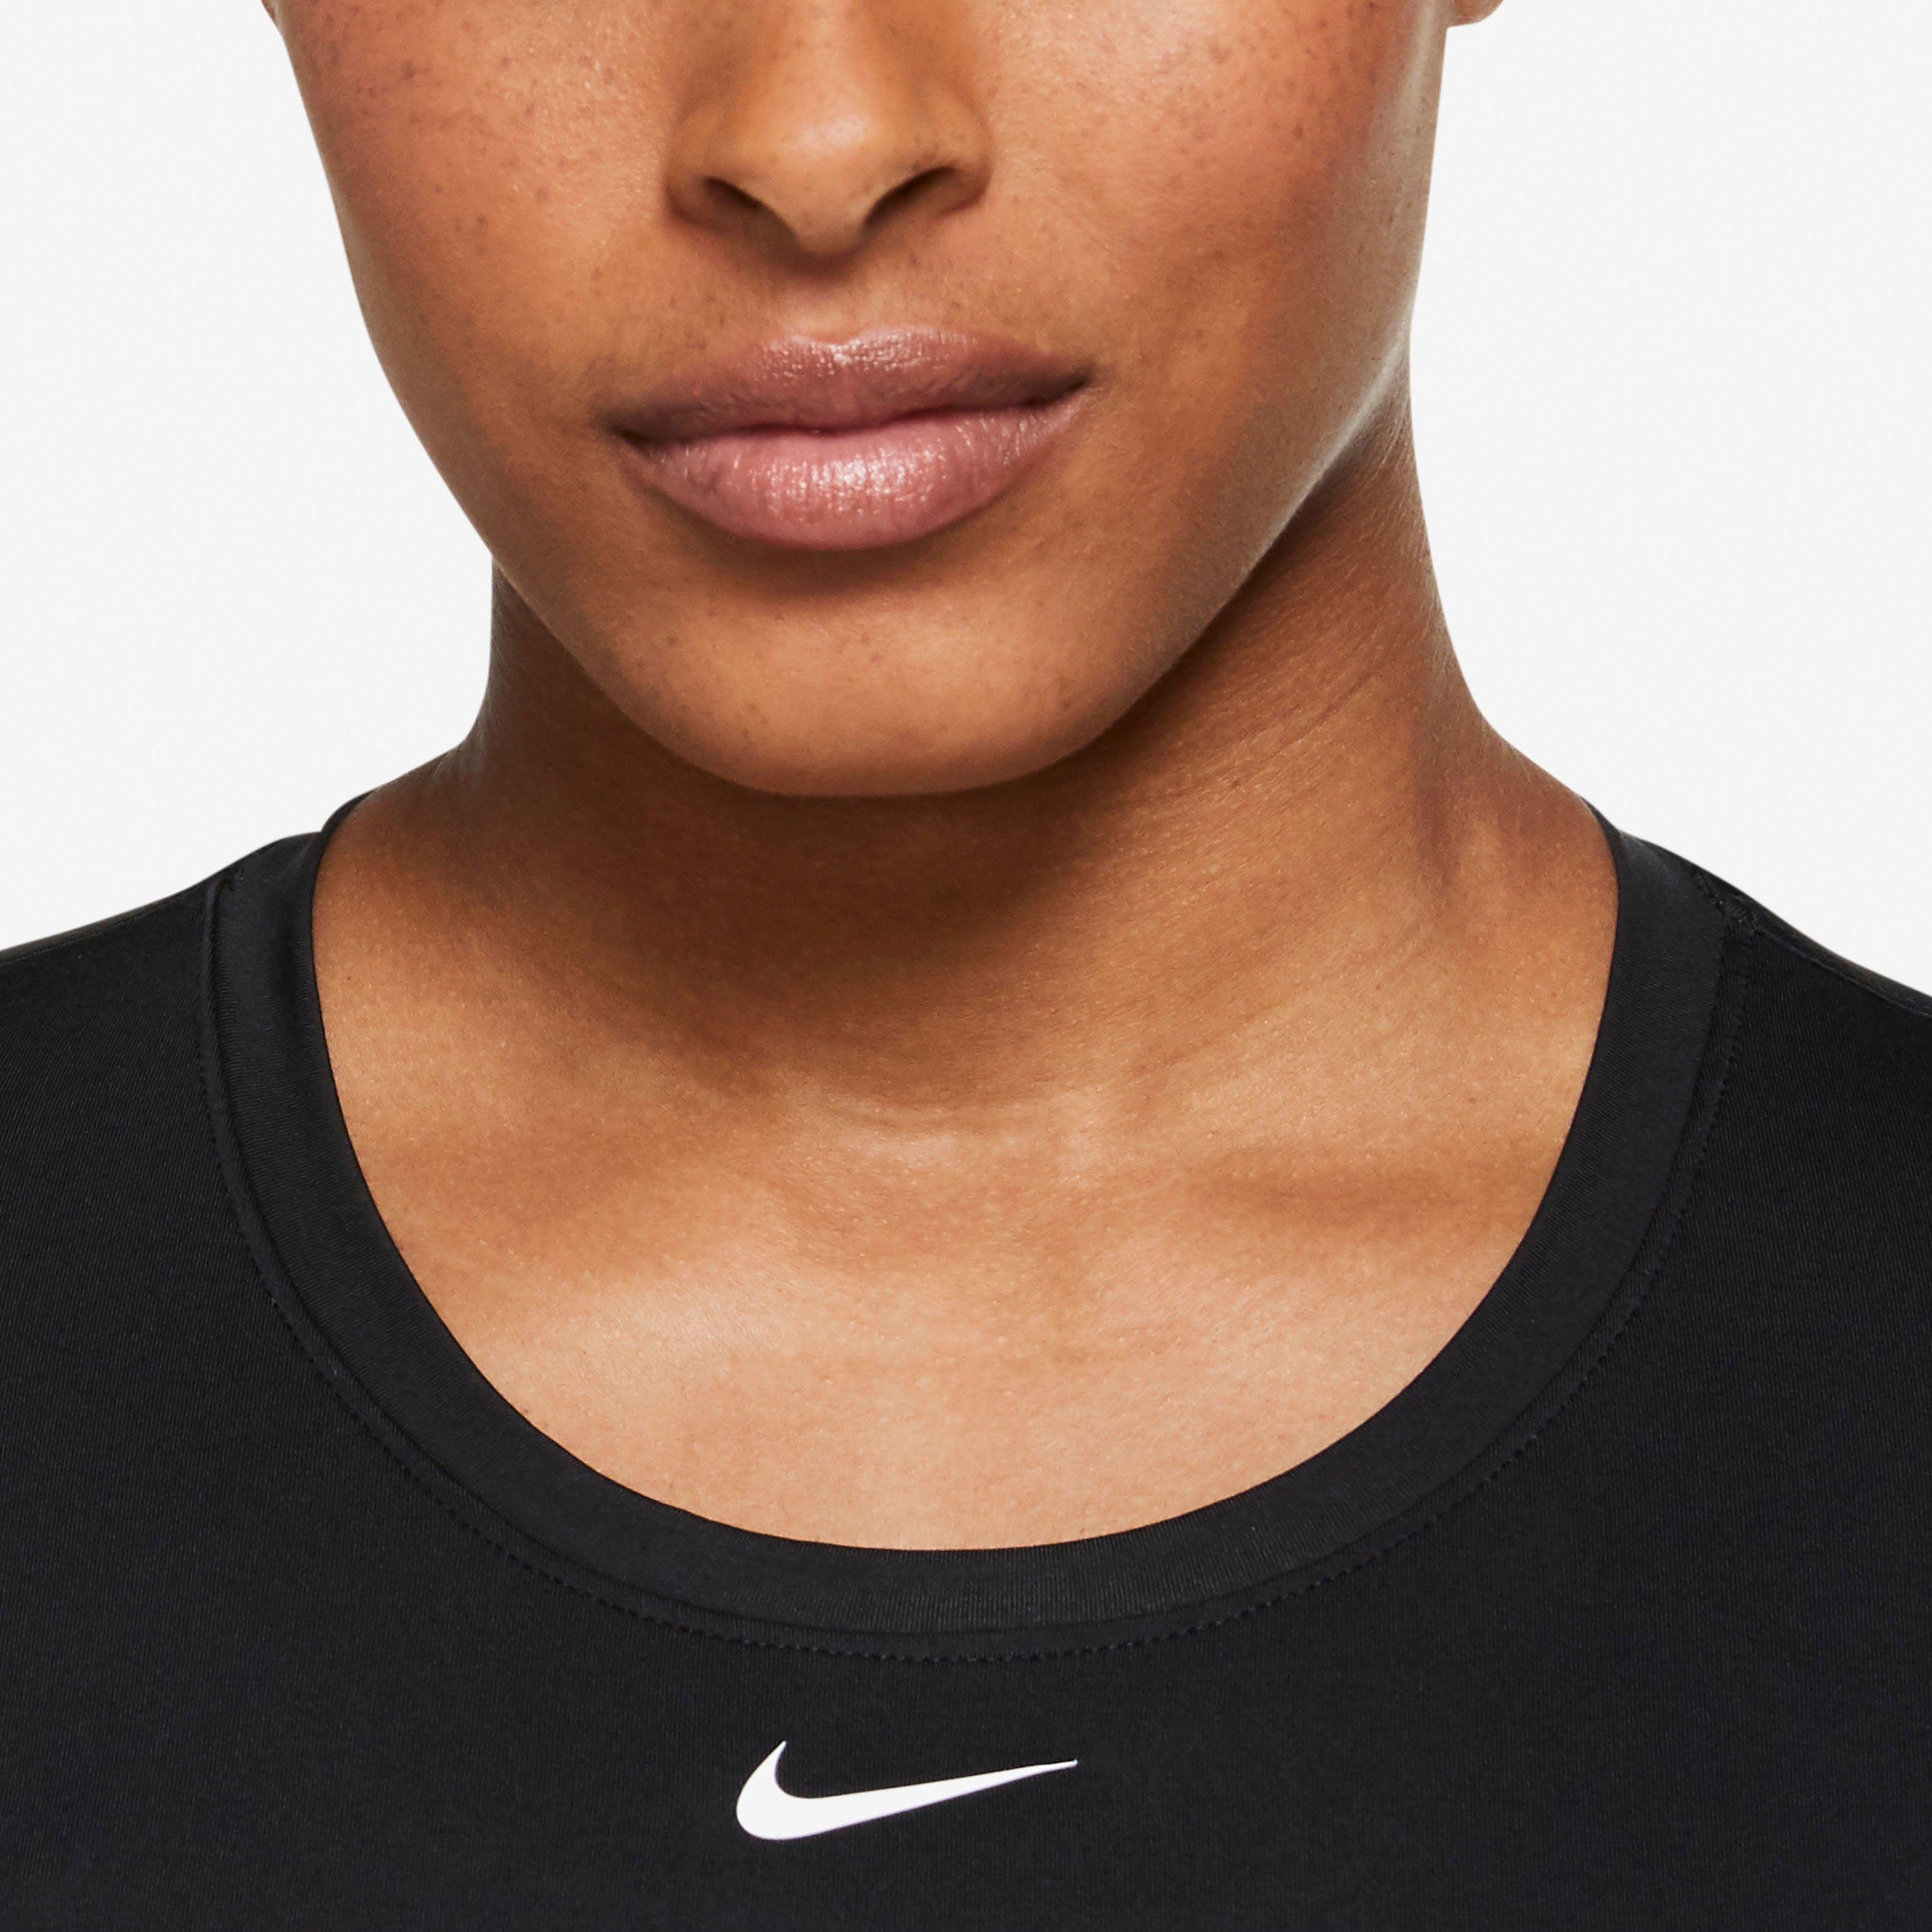 Nike Trainingsshirt DRI-FIT WOMEN'S SHORT-SLEEVE schwarz TOP FIT ONE SLIM